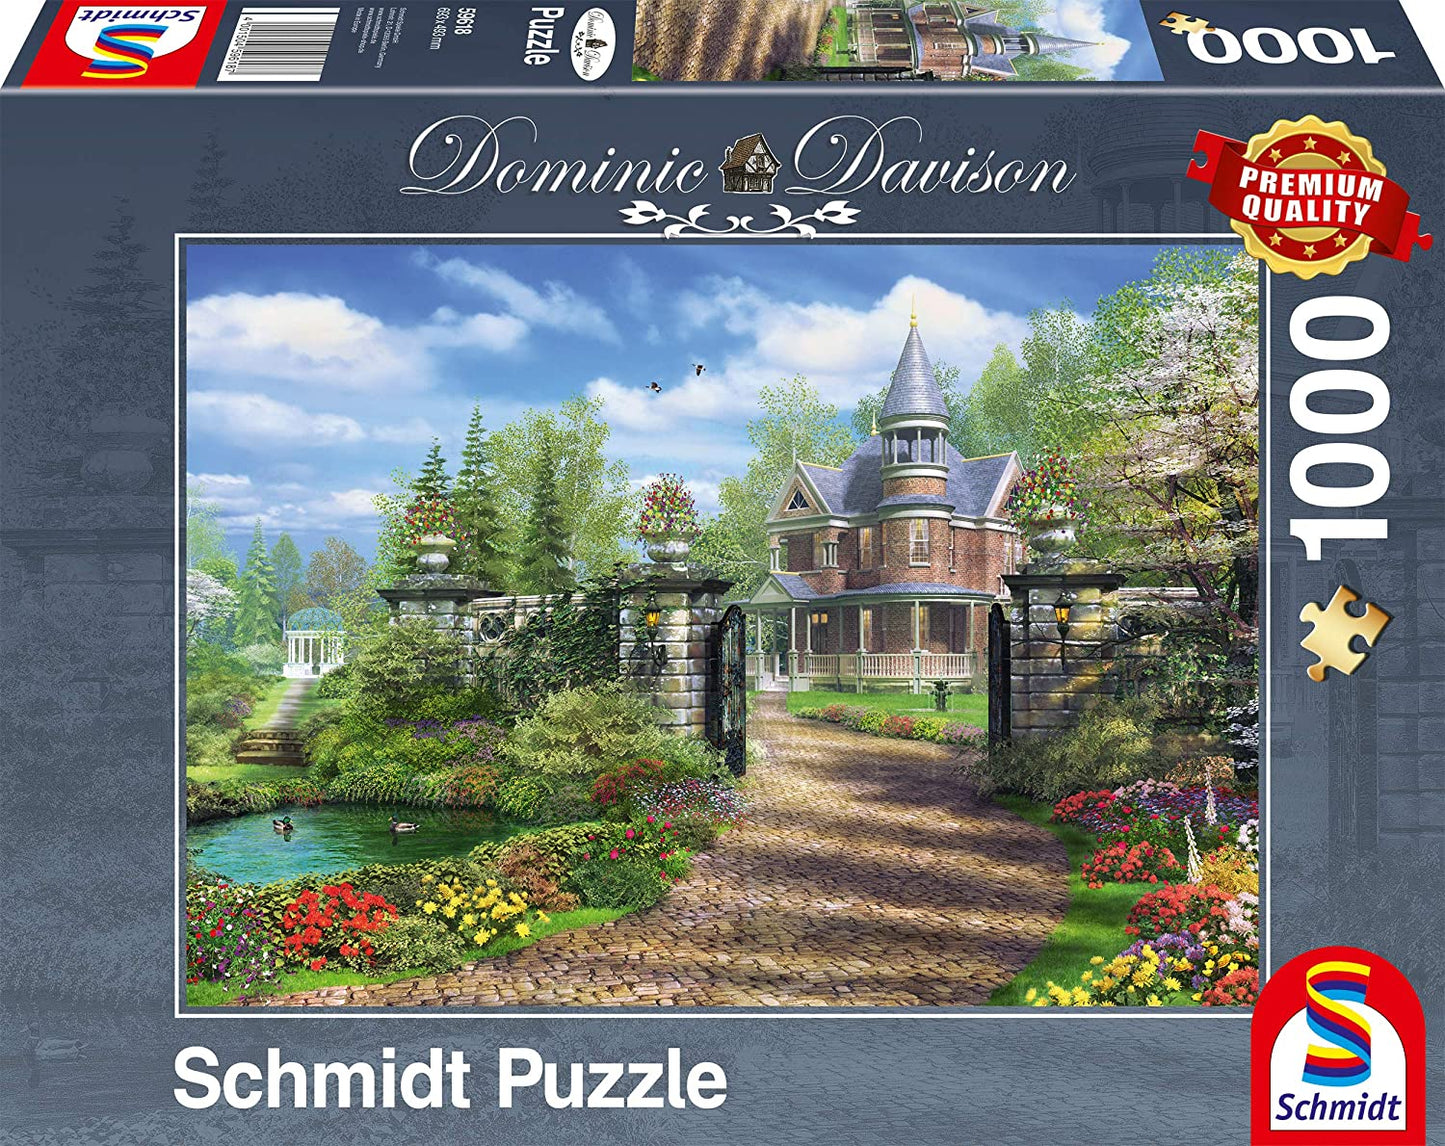 Schmidt - Dominic Davison - Idyllic Country Estate - 1000 Piece Jigsaw Puzzle